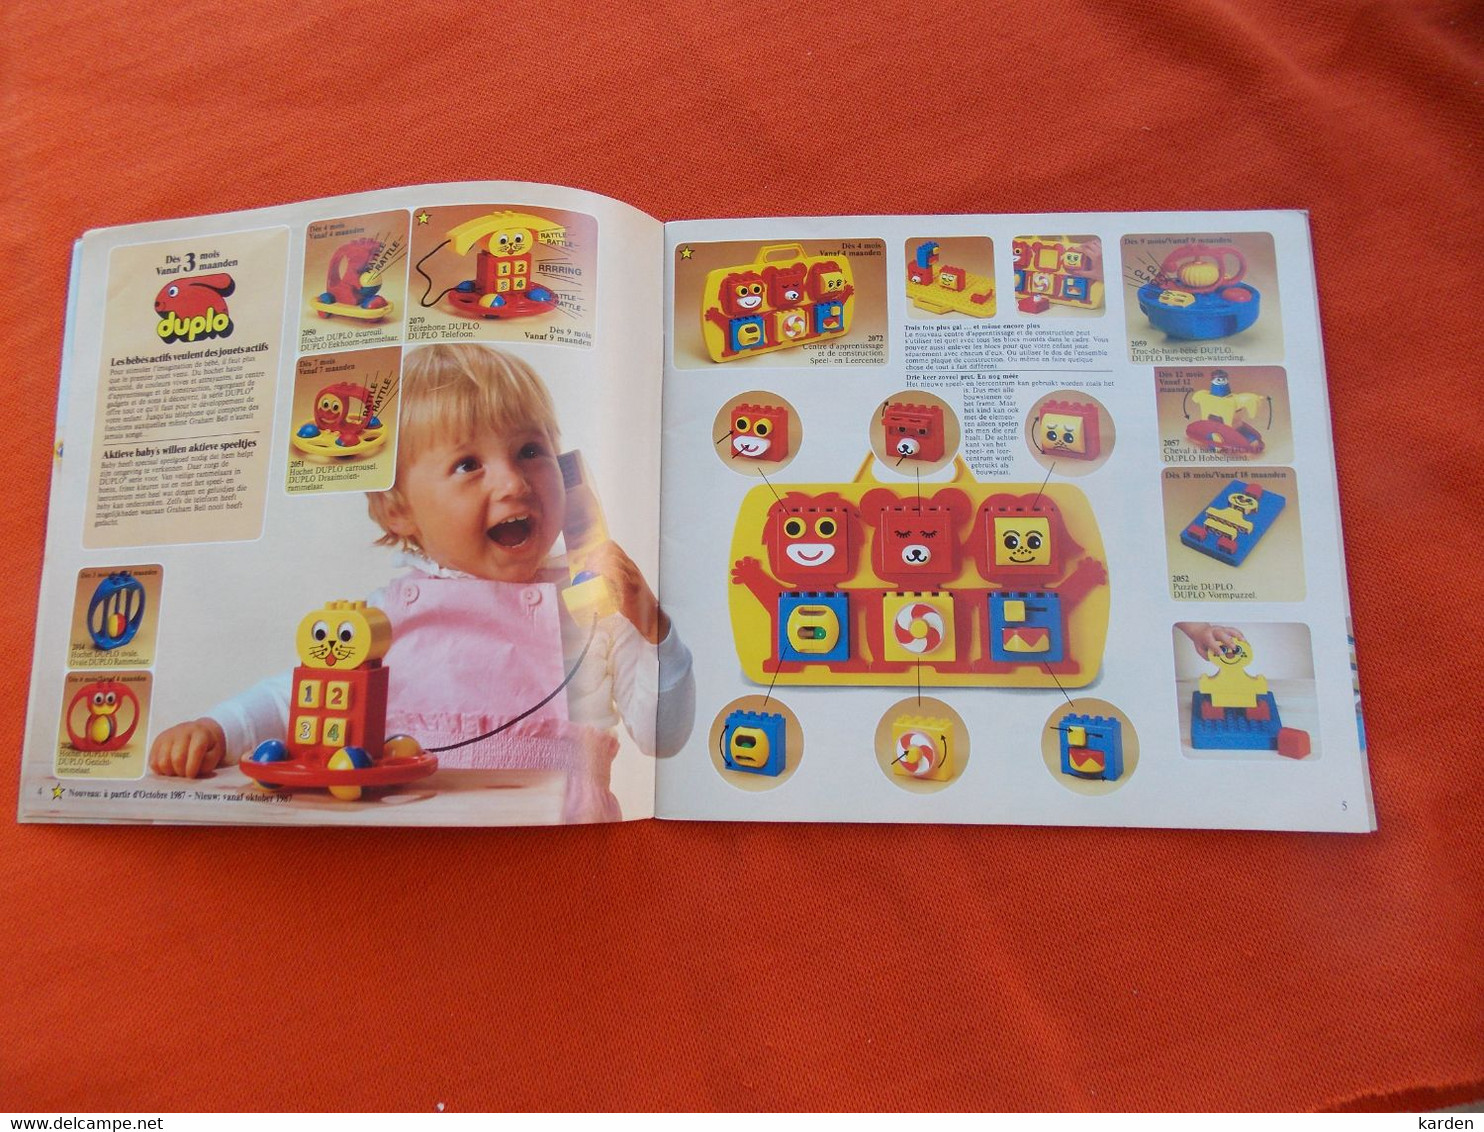 Lego Catalogus Assortiment Lego & Duplo 1987 - Kataloge